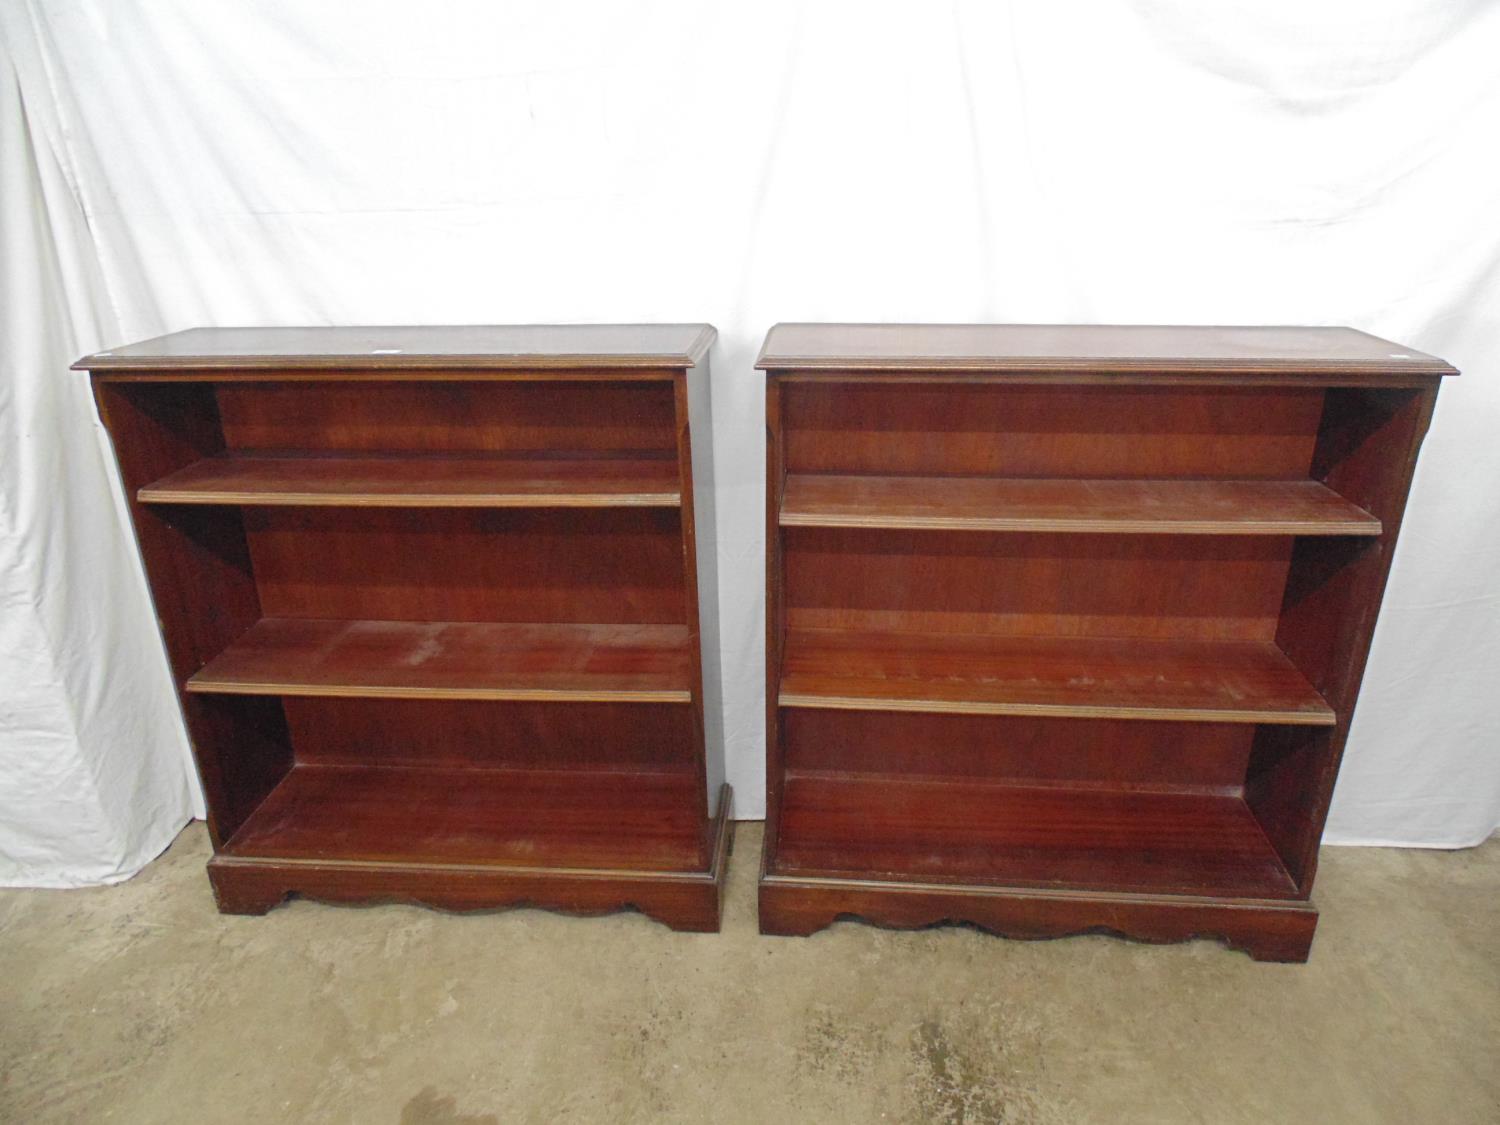 Reproduction mahogany open bookshelves with two adjustable shelves, standing on bracket feet -